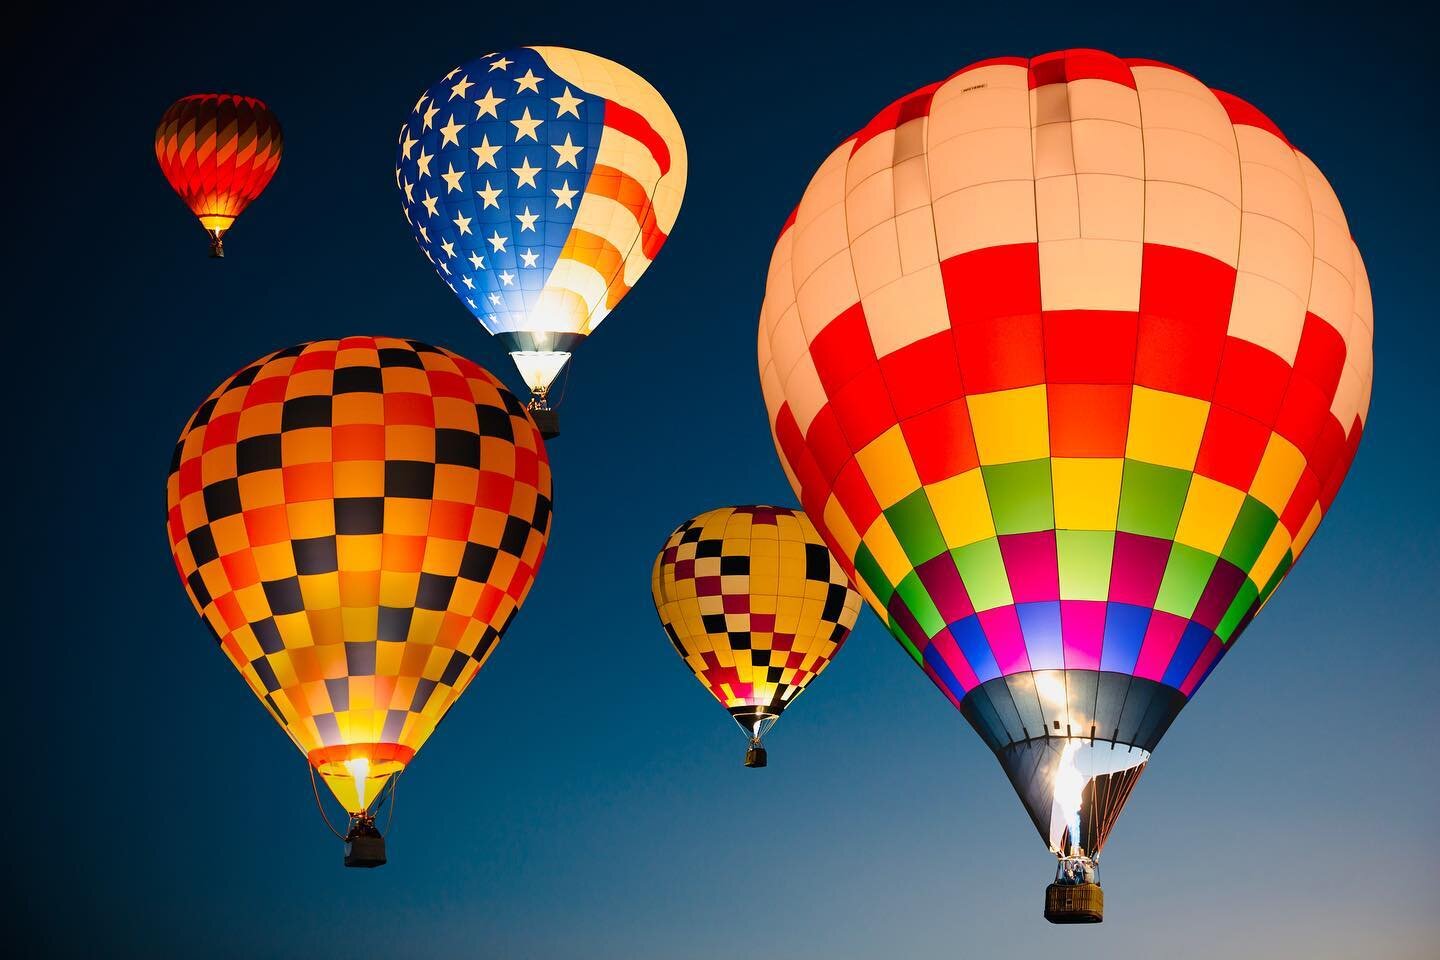 Albuquerque International Balloon Fiesta 2022

#aibf #albuquerque #albuquerqueballoonfiesta #abq #hotairballoon #balloon #balloons #glow #dawnpatrol #instagood #insta #beautiful #transportation @balloonfiesta